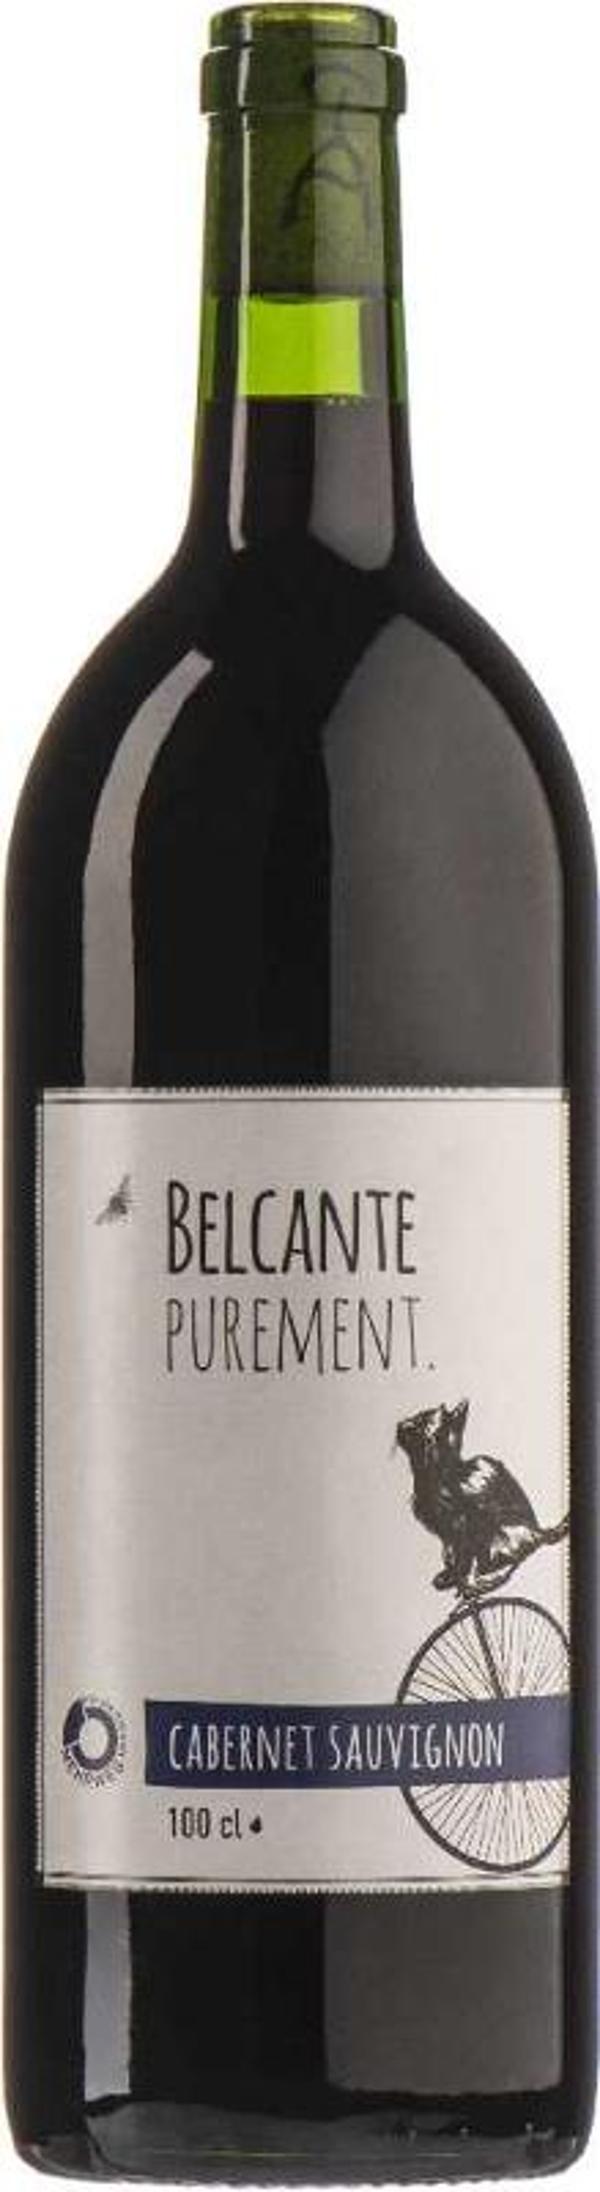 Produktfoto zu Belcante Cabernet Sauvignon